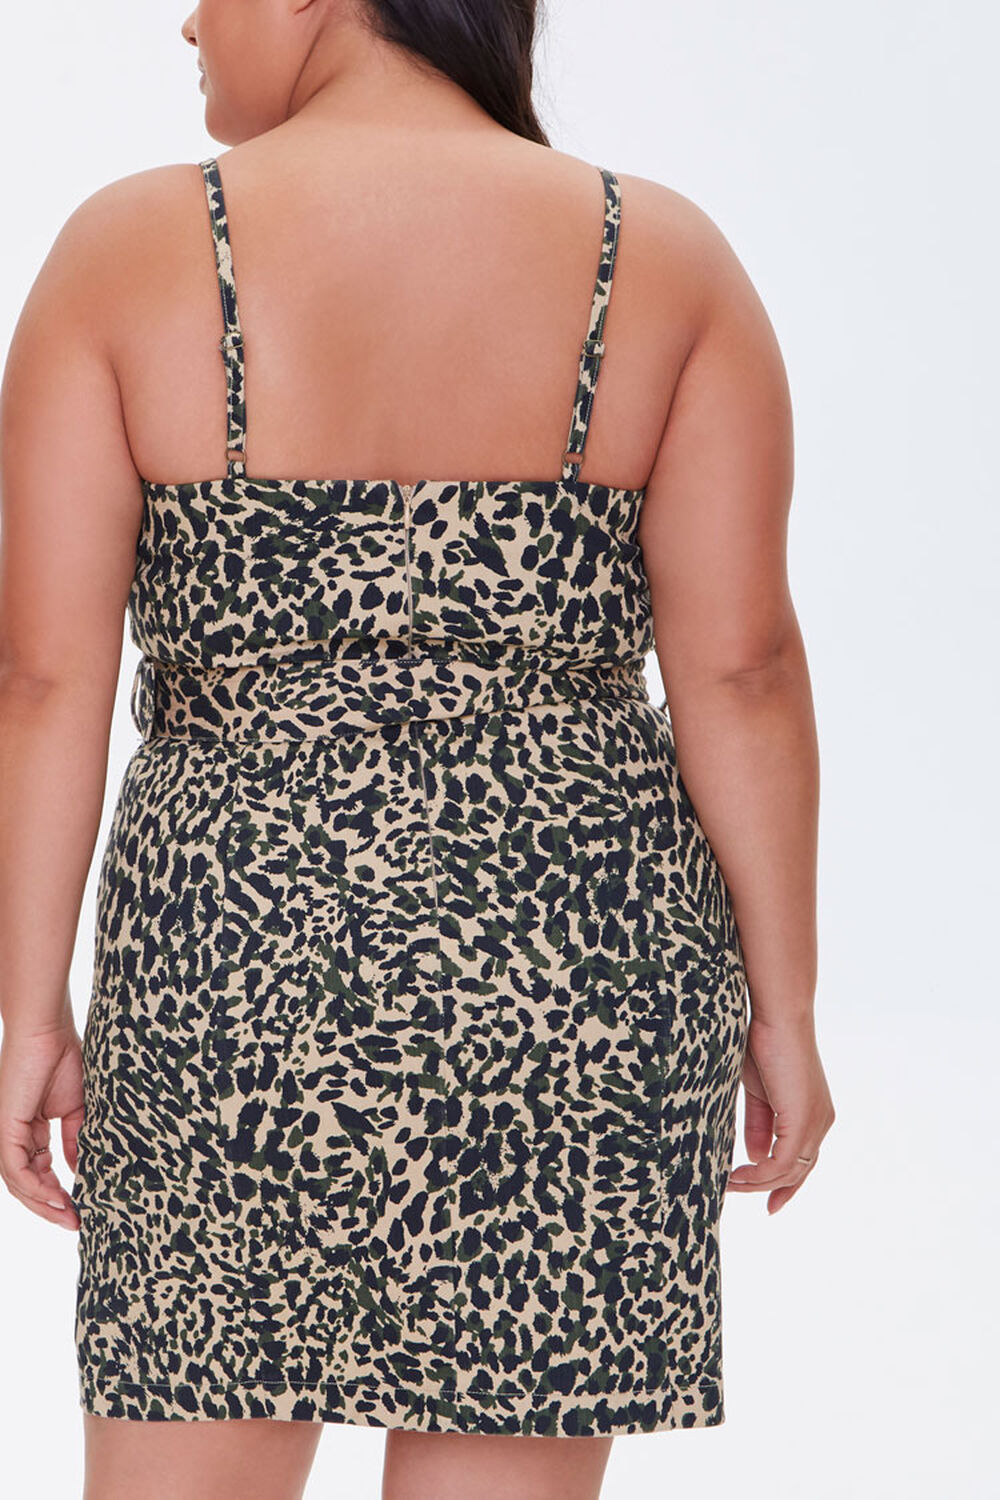 Plus Size Cheetah Print Dress, image 3